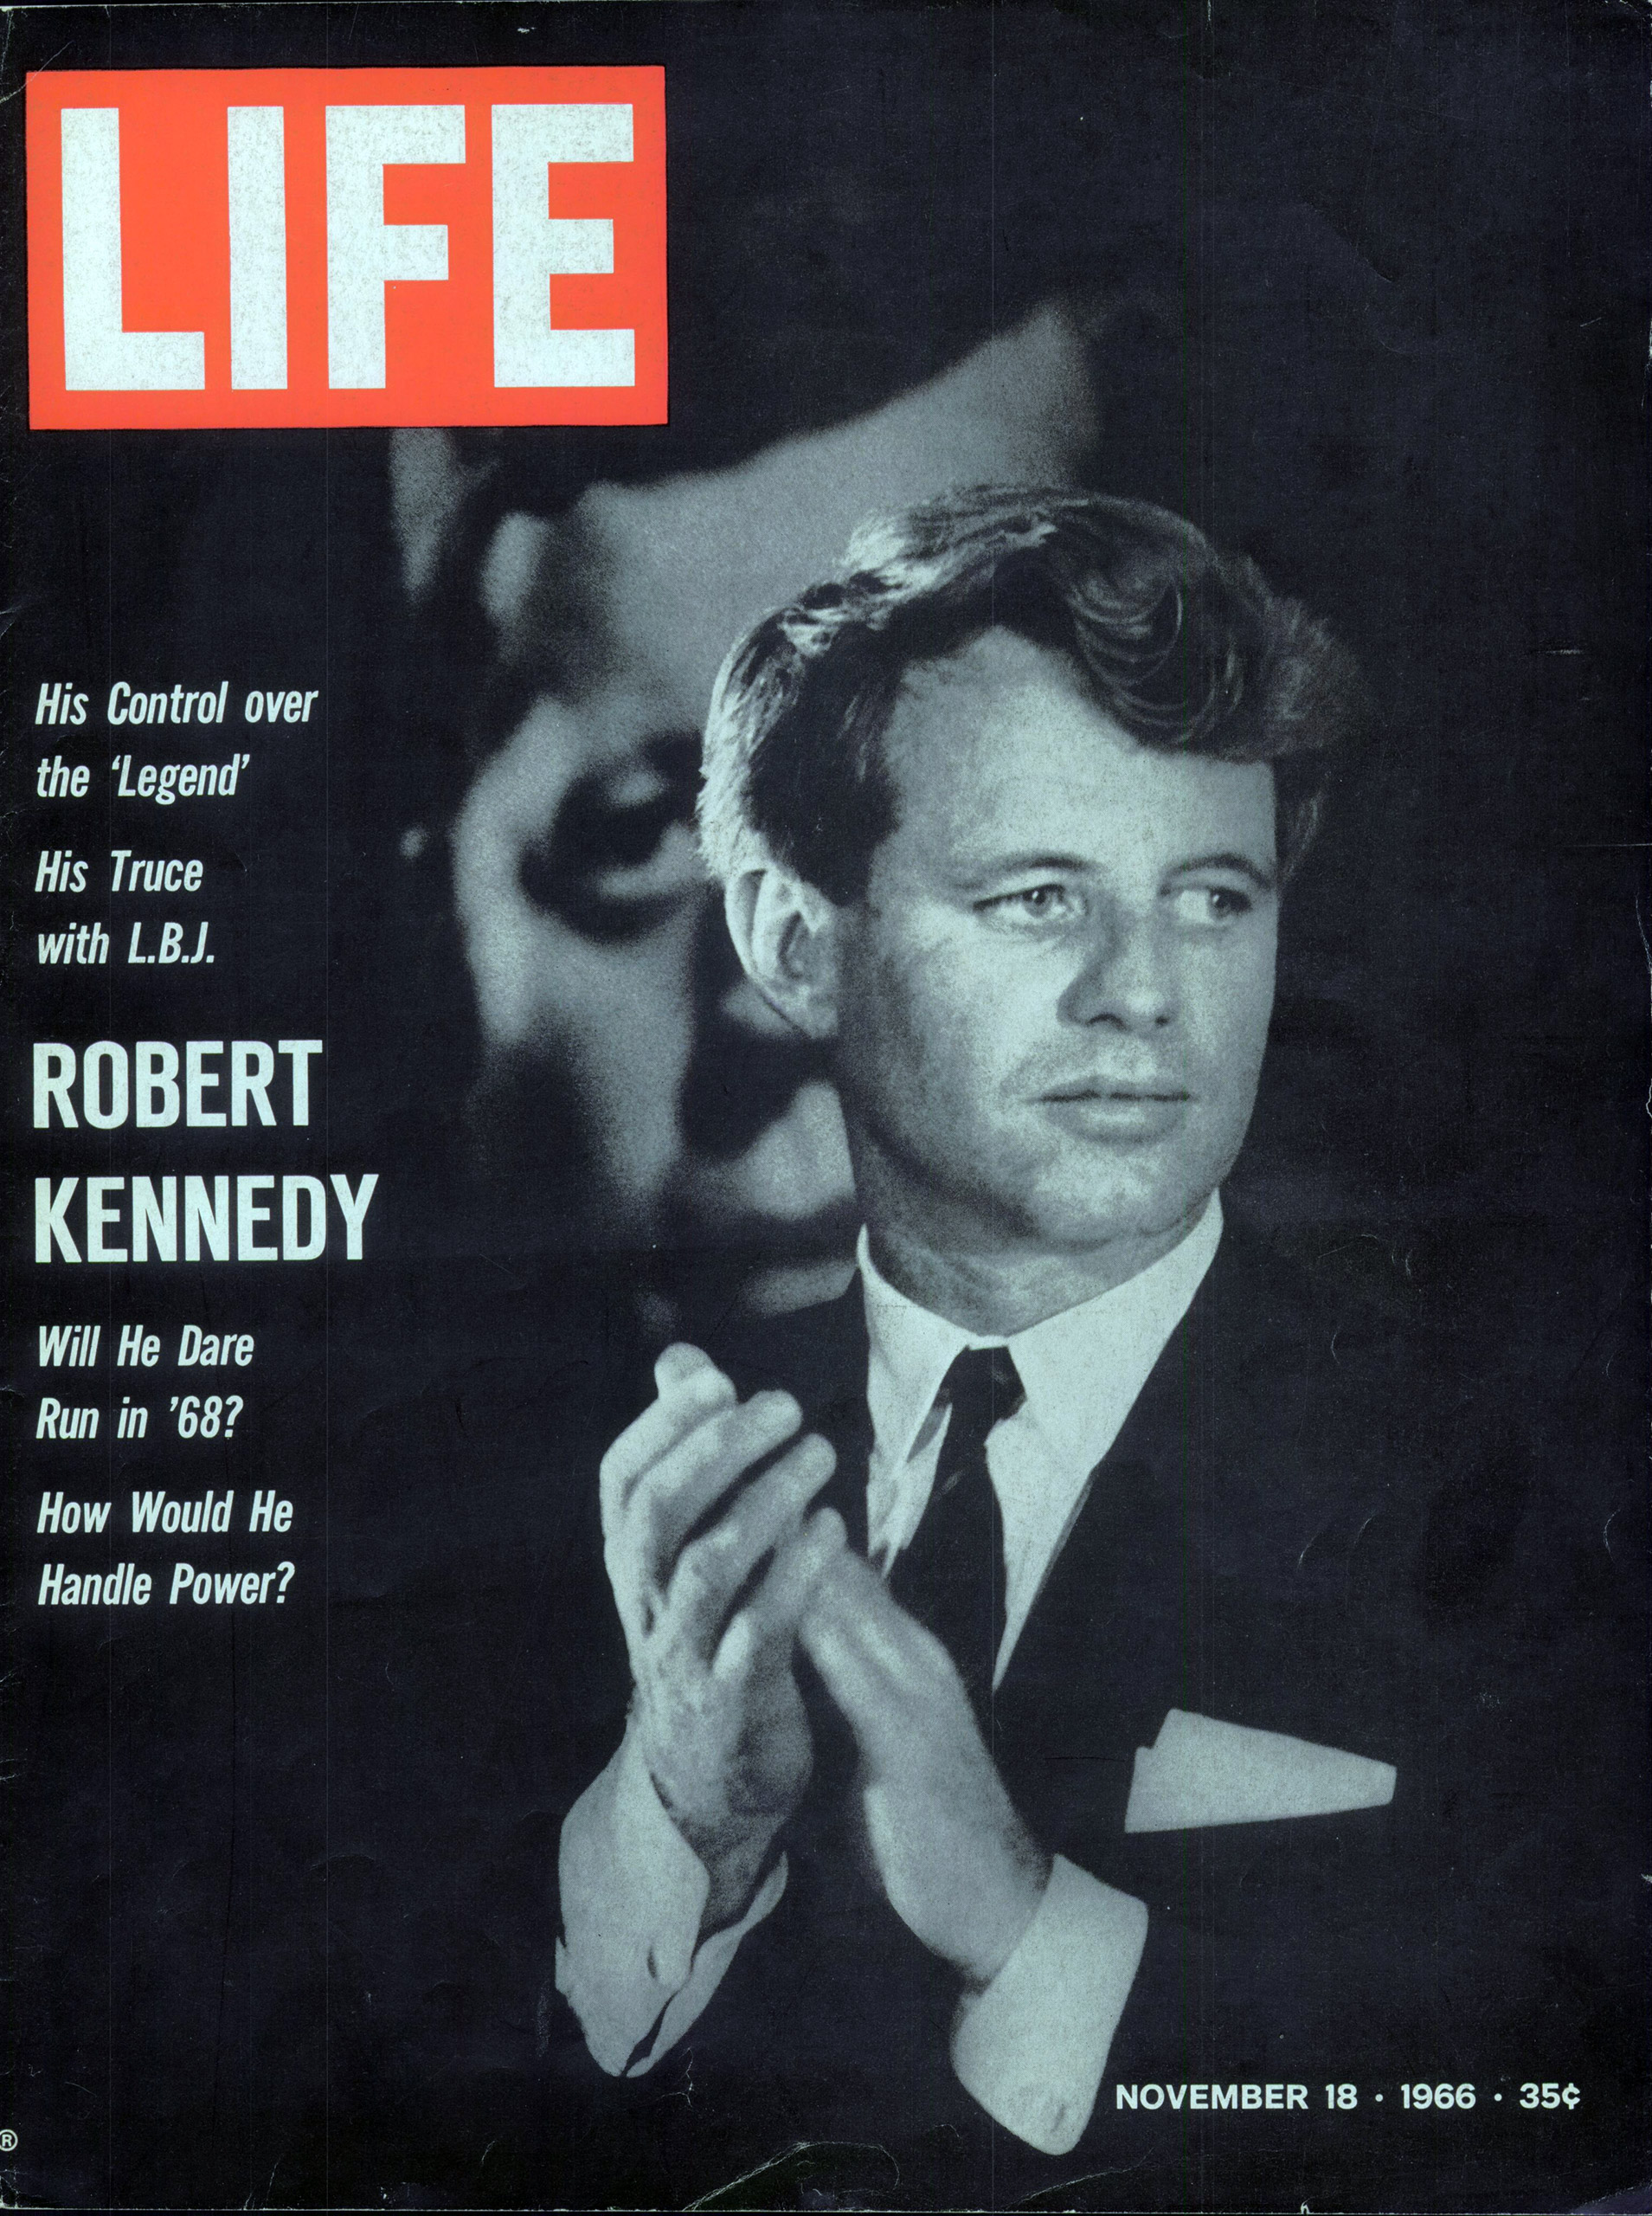 Nov. 18, 1966 cover of LIFE magazine. Cover photo by Bill Eppridge.